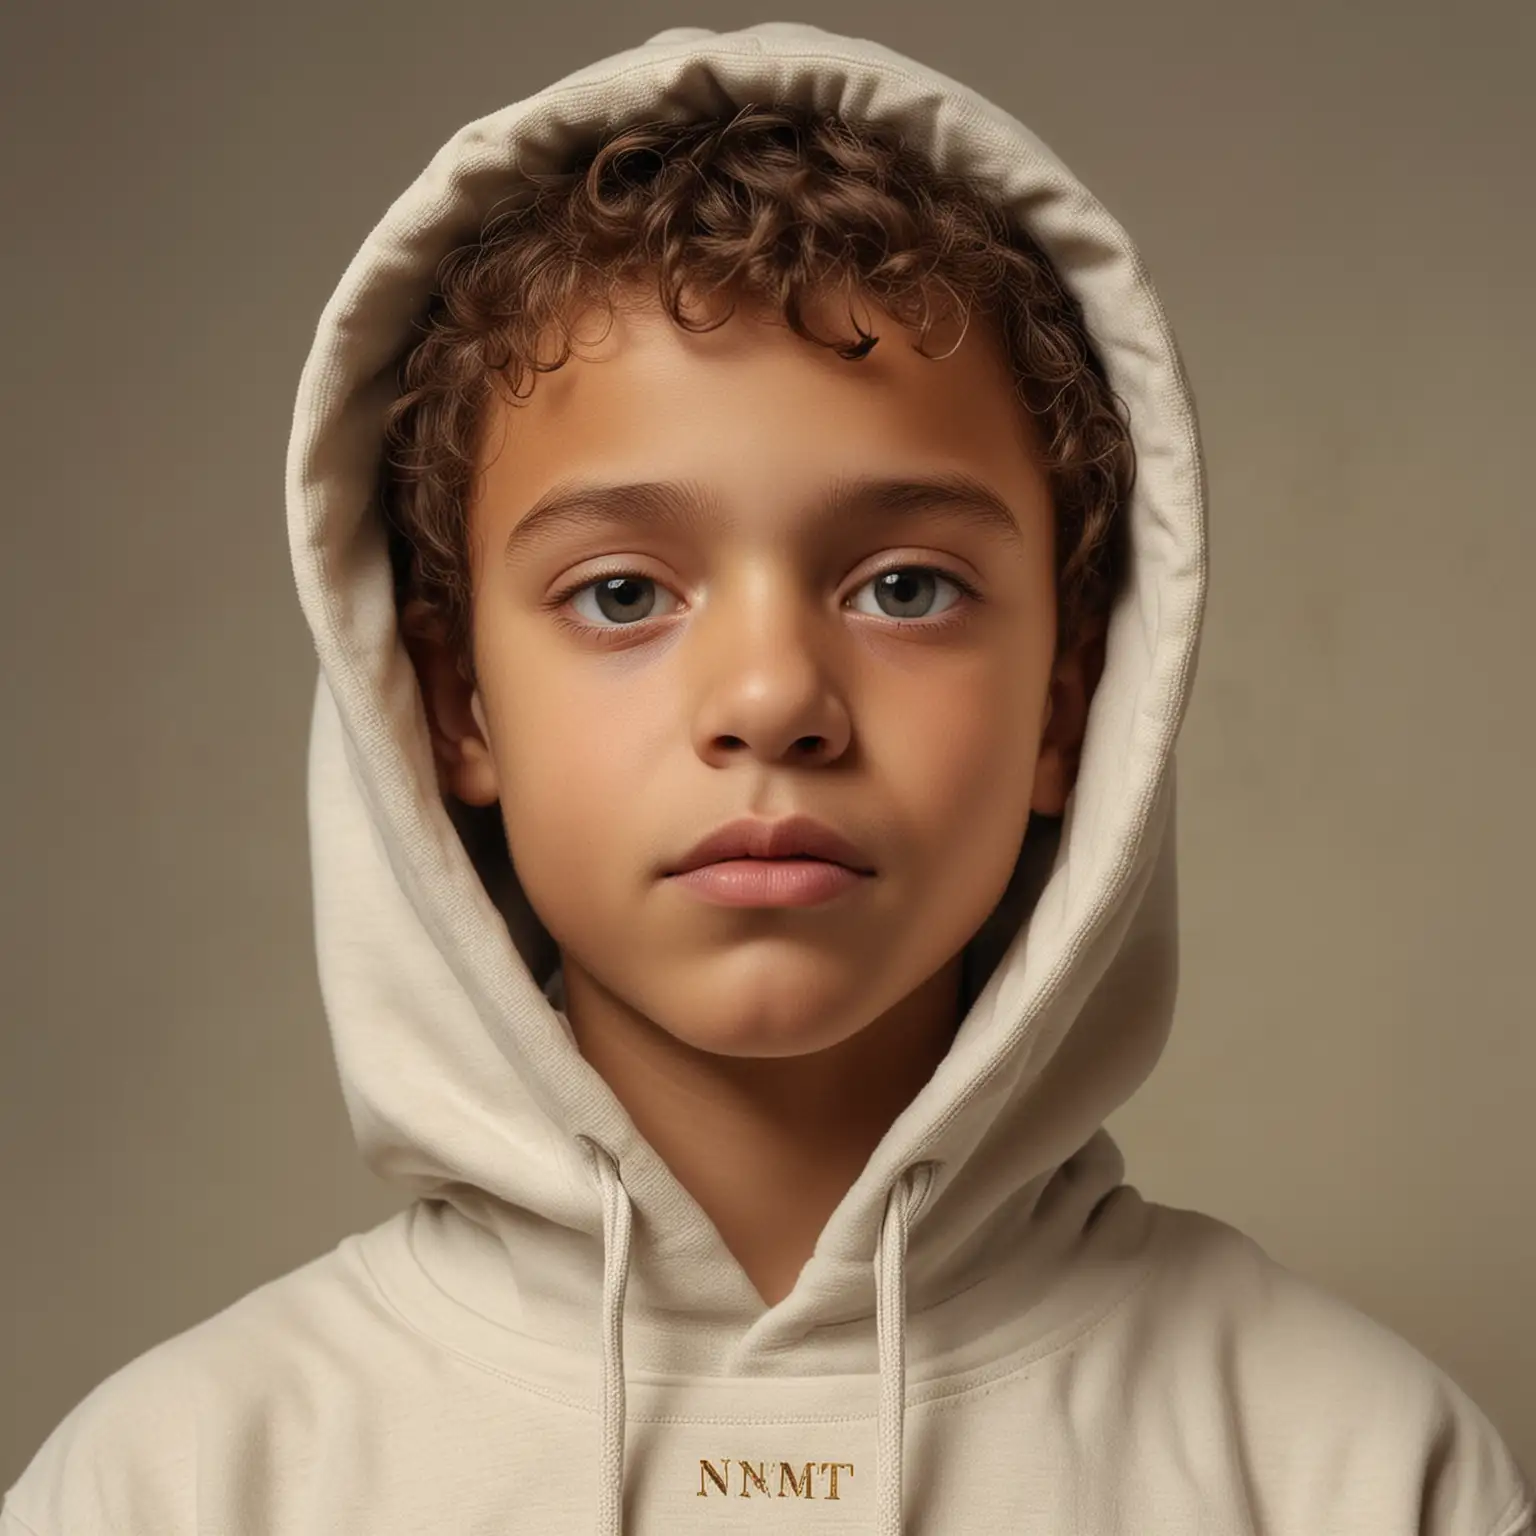 Portrait of a renaissance boy 
Met hoodie
Blauwe ogen 
age 10 looking straight into camera
Very light skin